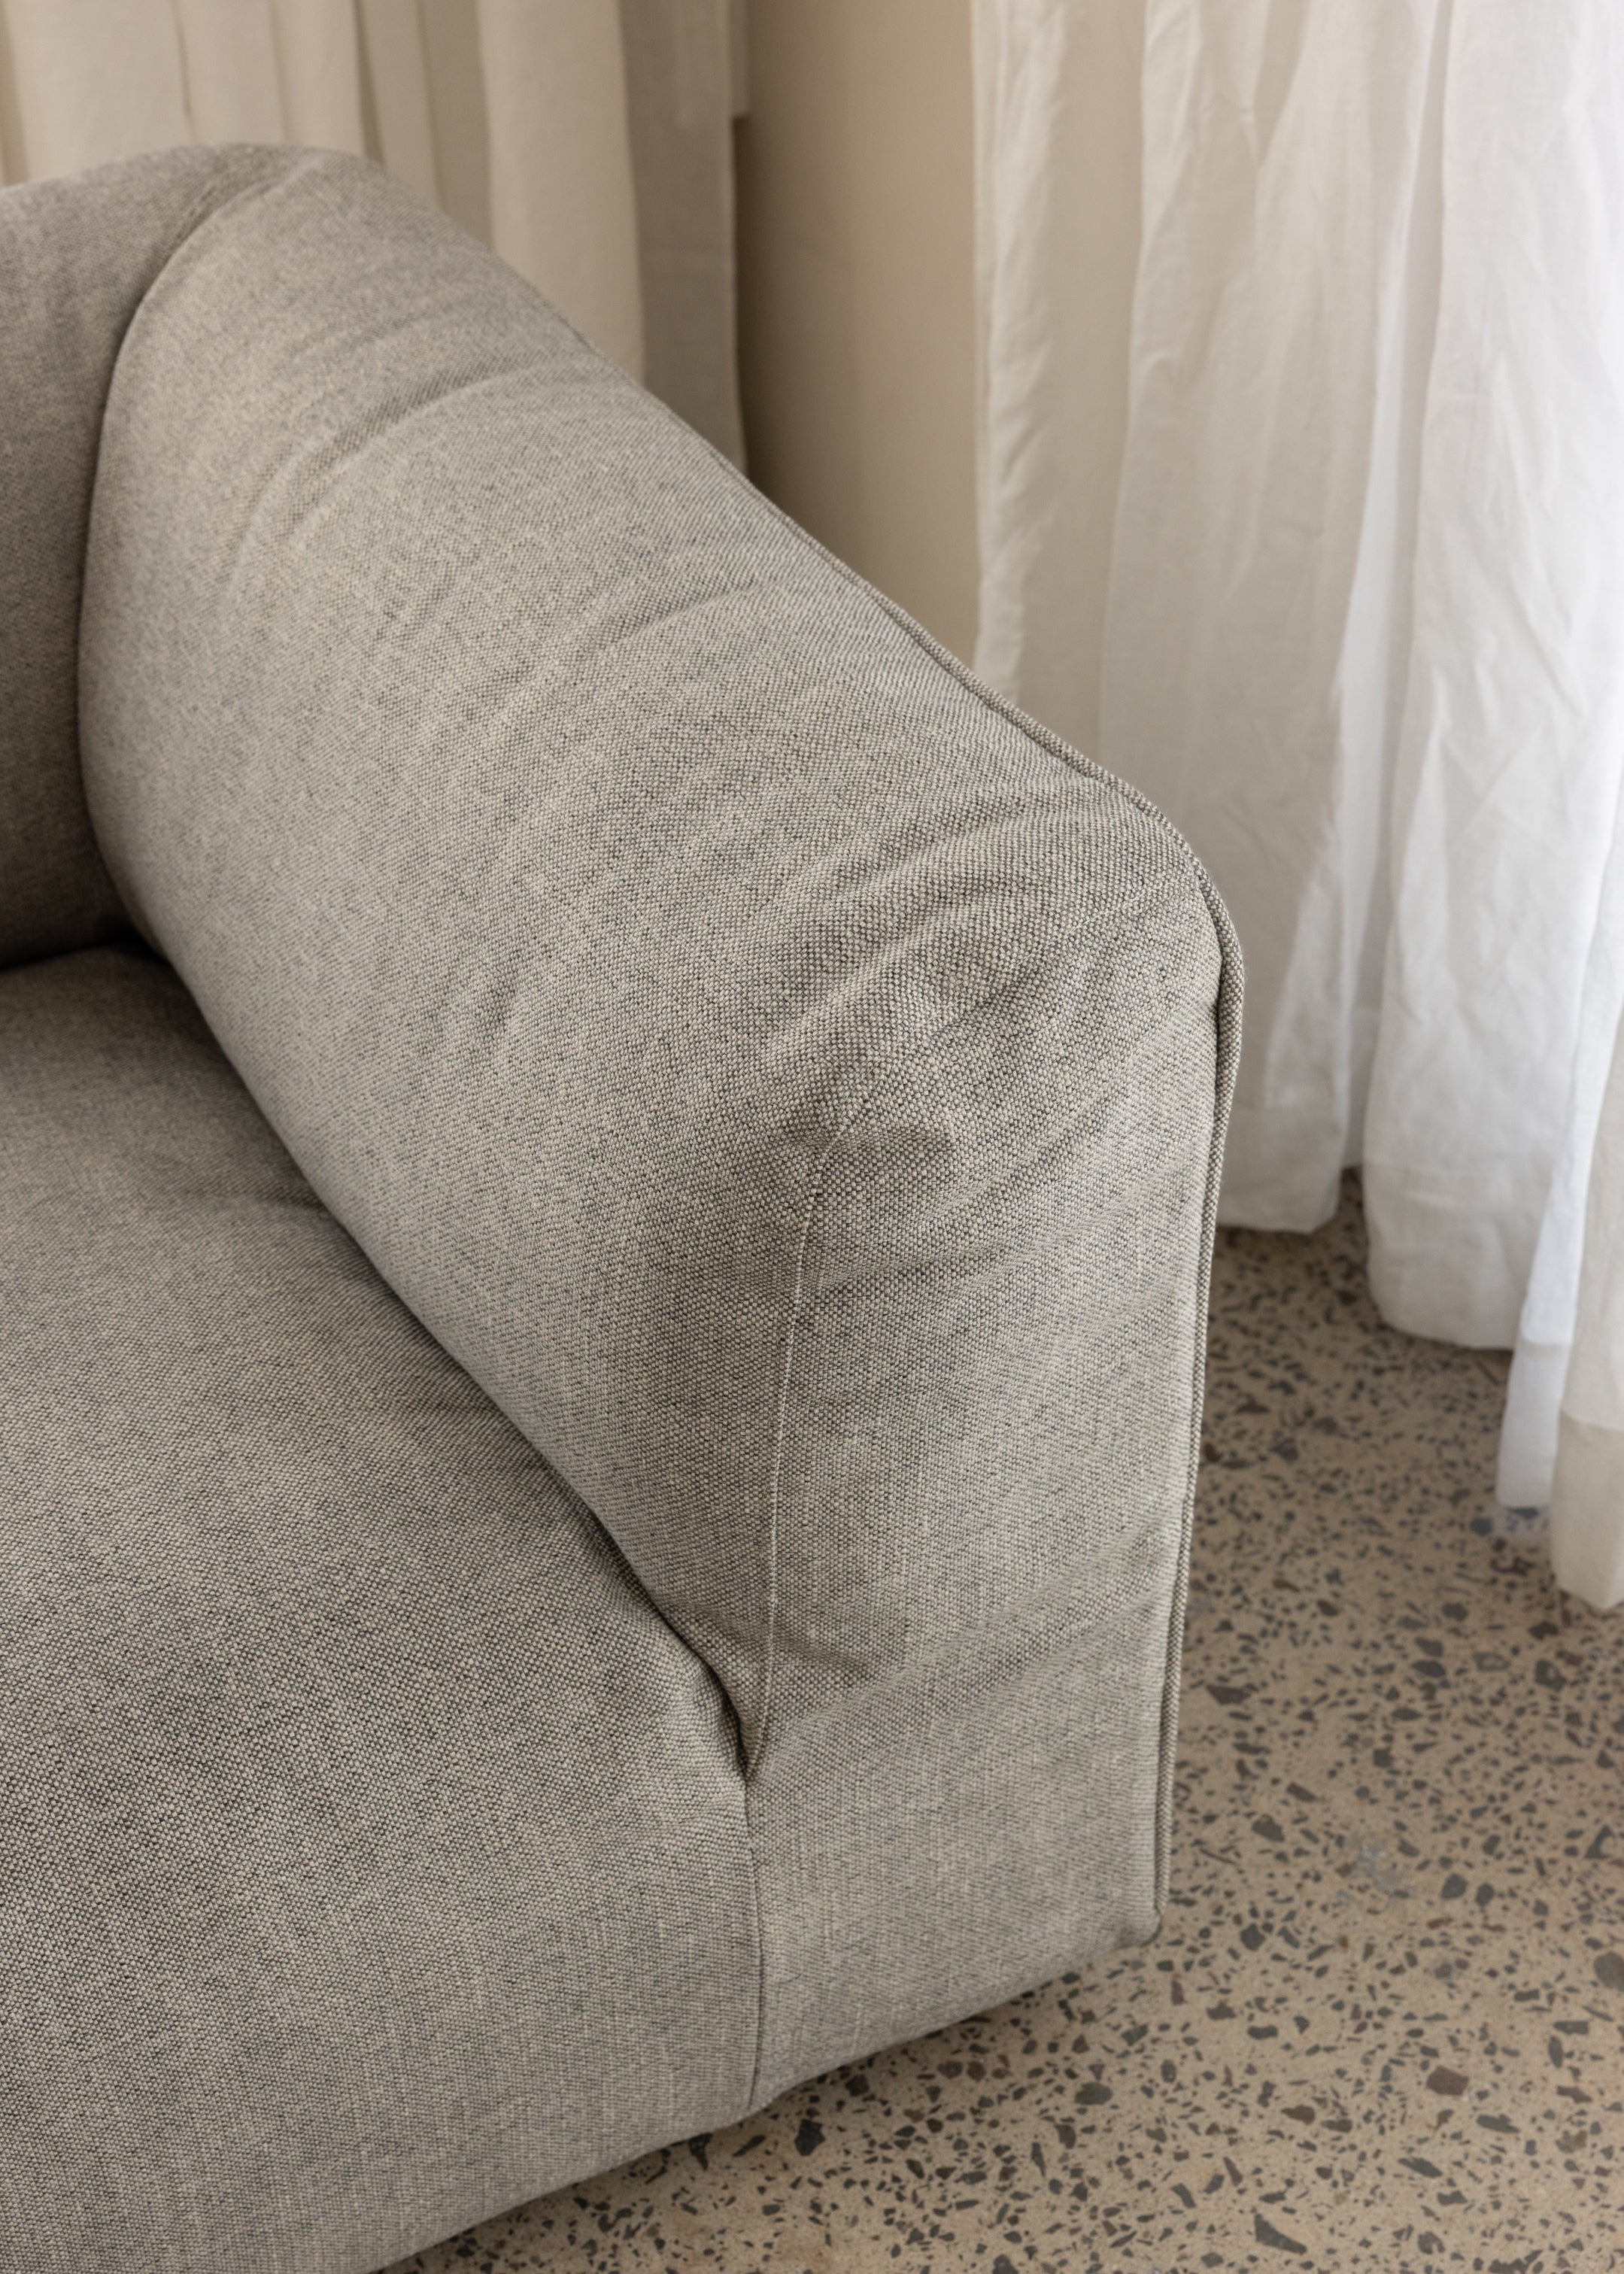 Plum Sofa 3 Seat / Santa Monica Smooth Grey